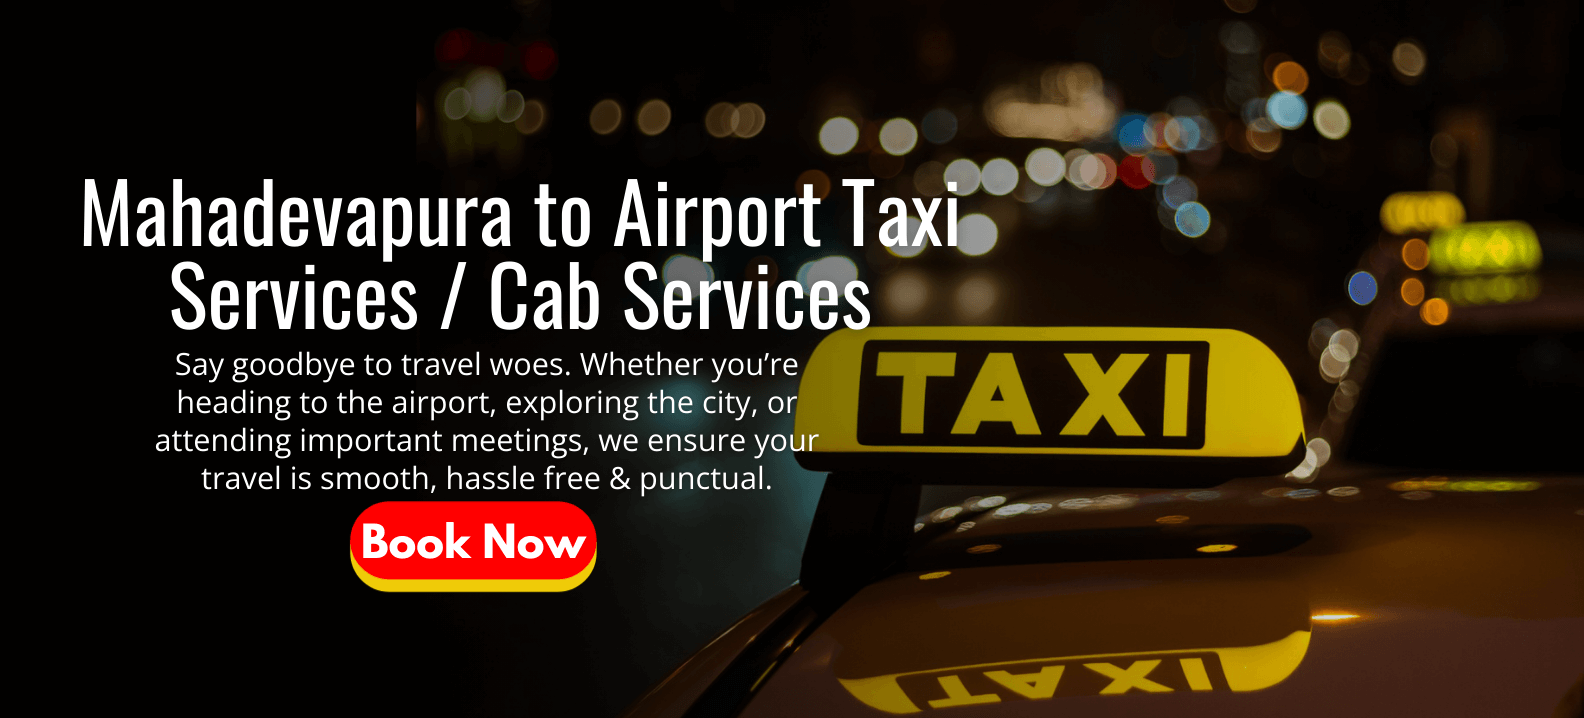 Mahadevapura to Airport Taxi Services _ Cab Services